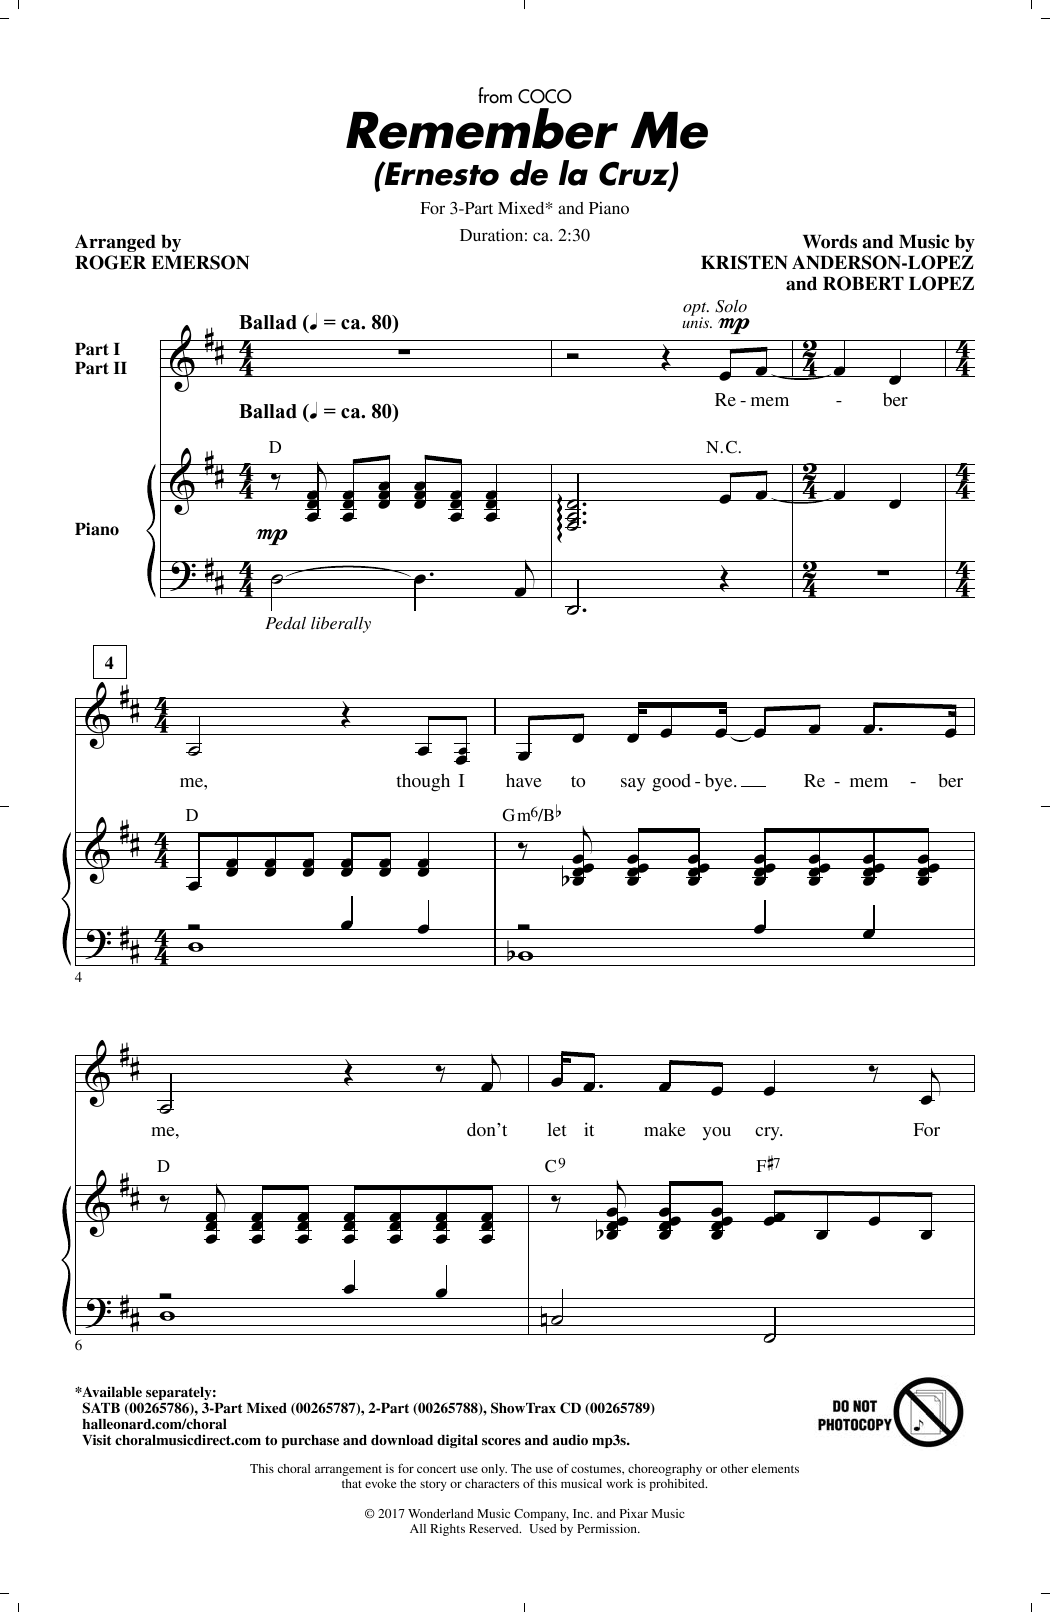 Kristen Anderson-Lopez & Robert Lopez Remember Me (Ernesto de la Cruz) (from Coco) (arr. Roger Emerson) Sheet Music Notes & Chords for 3-Part Mixed - Download or Print PDF